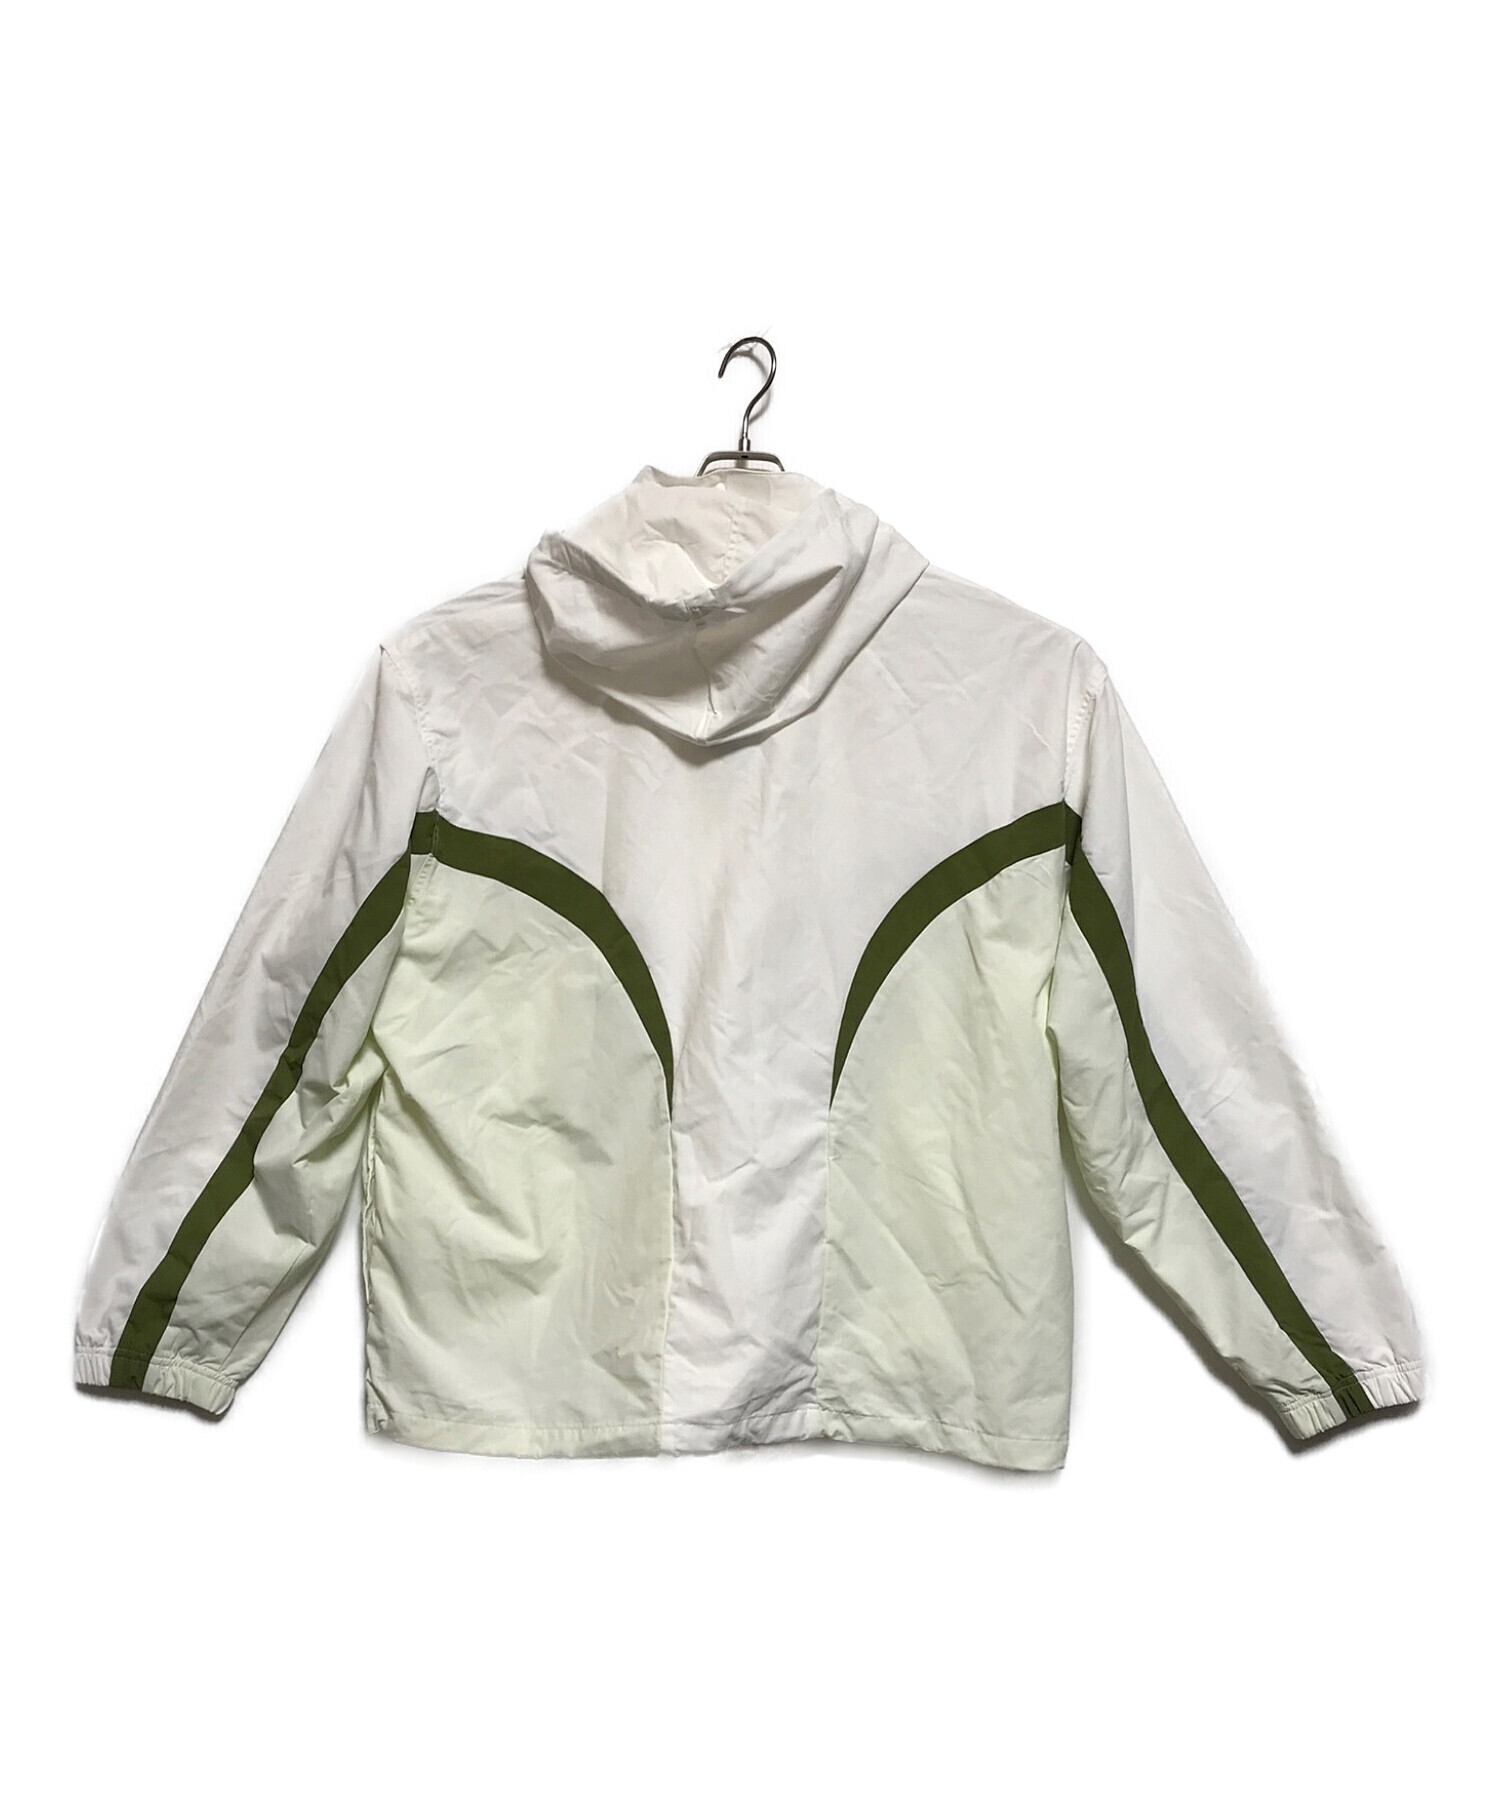 Supreme (シュプリーム) Curve Track Jacket/カーブトラックジャケット ホワイト×グリーン サイズ:XL(下記参照)